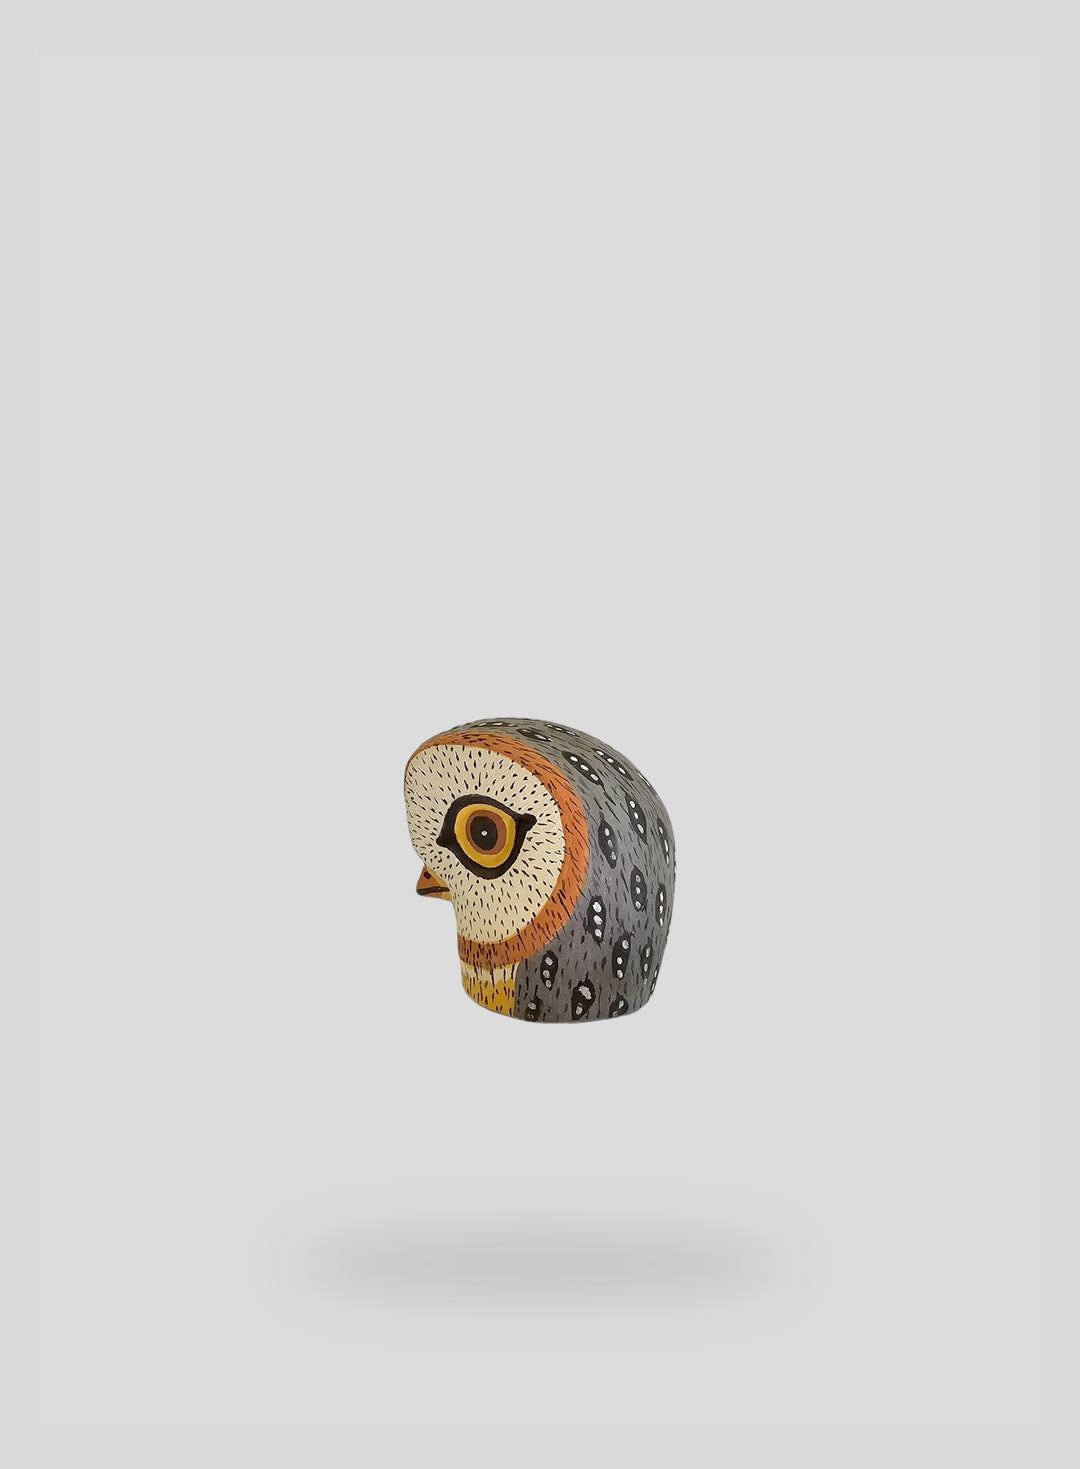 The Mini Owl Sculpture